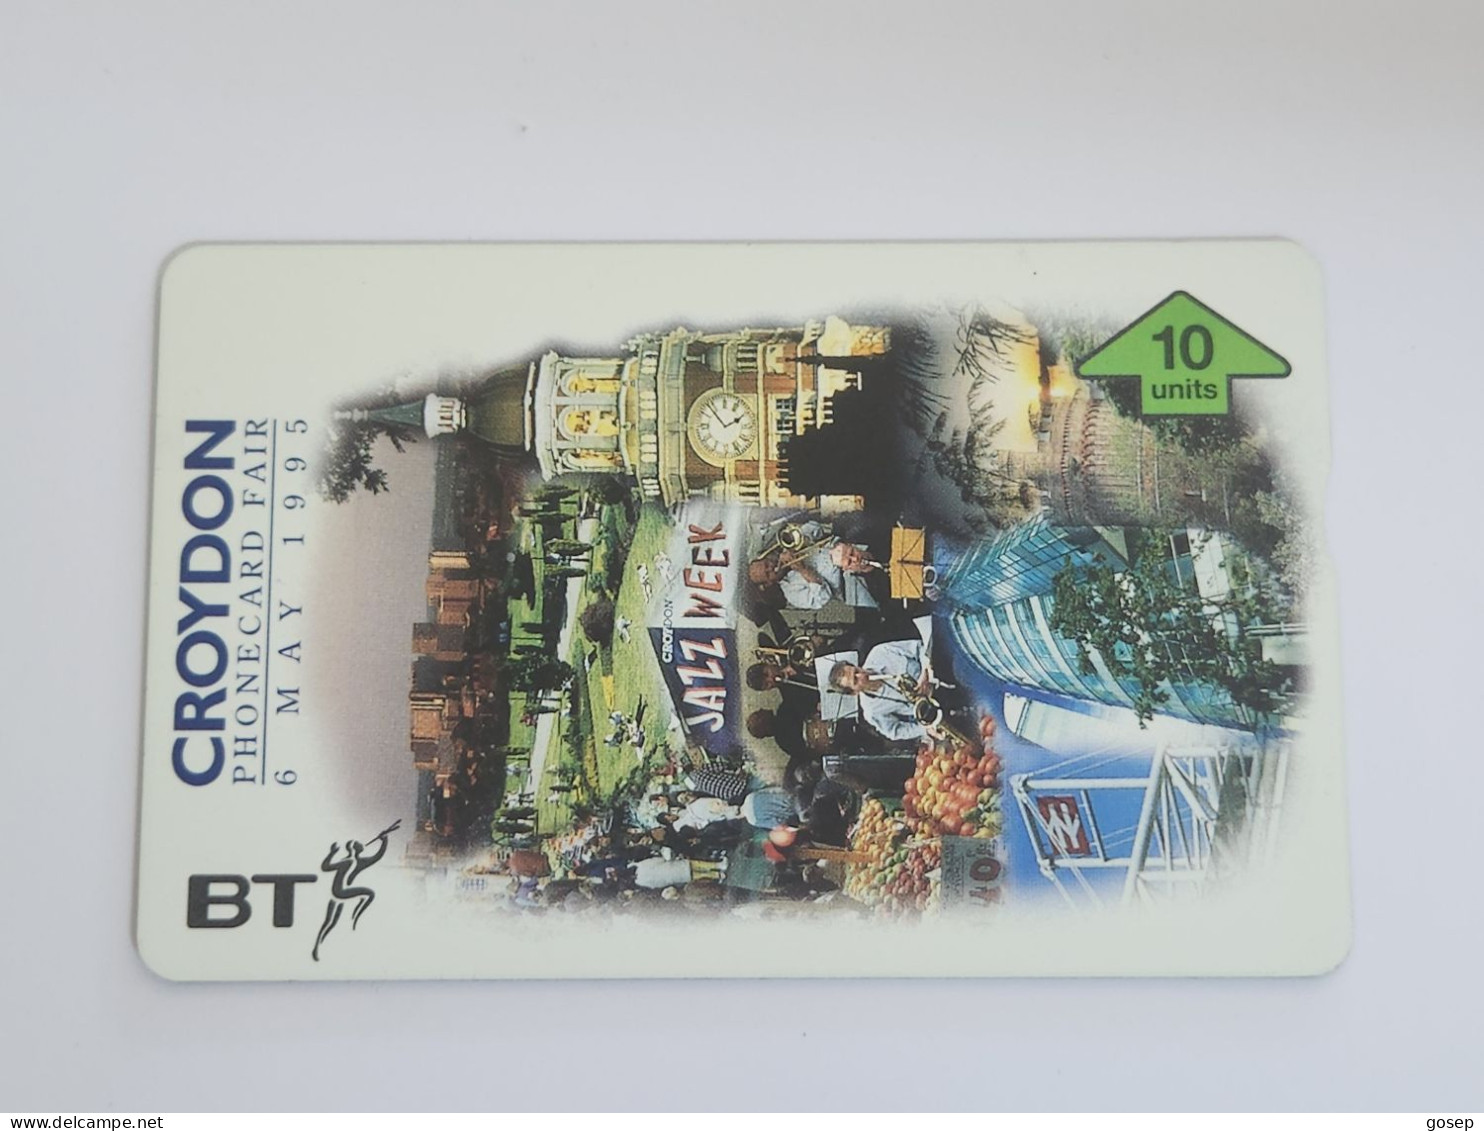 United Kingdom-(BTI126)-CROYDON FAIR-1995-(131)(10units)(510D)(tirage-1.000)(price Cataloge-15.00£-mint) - BT Interne